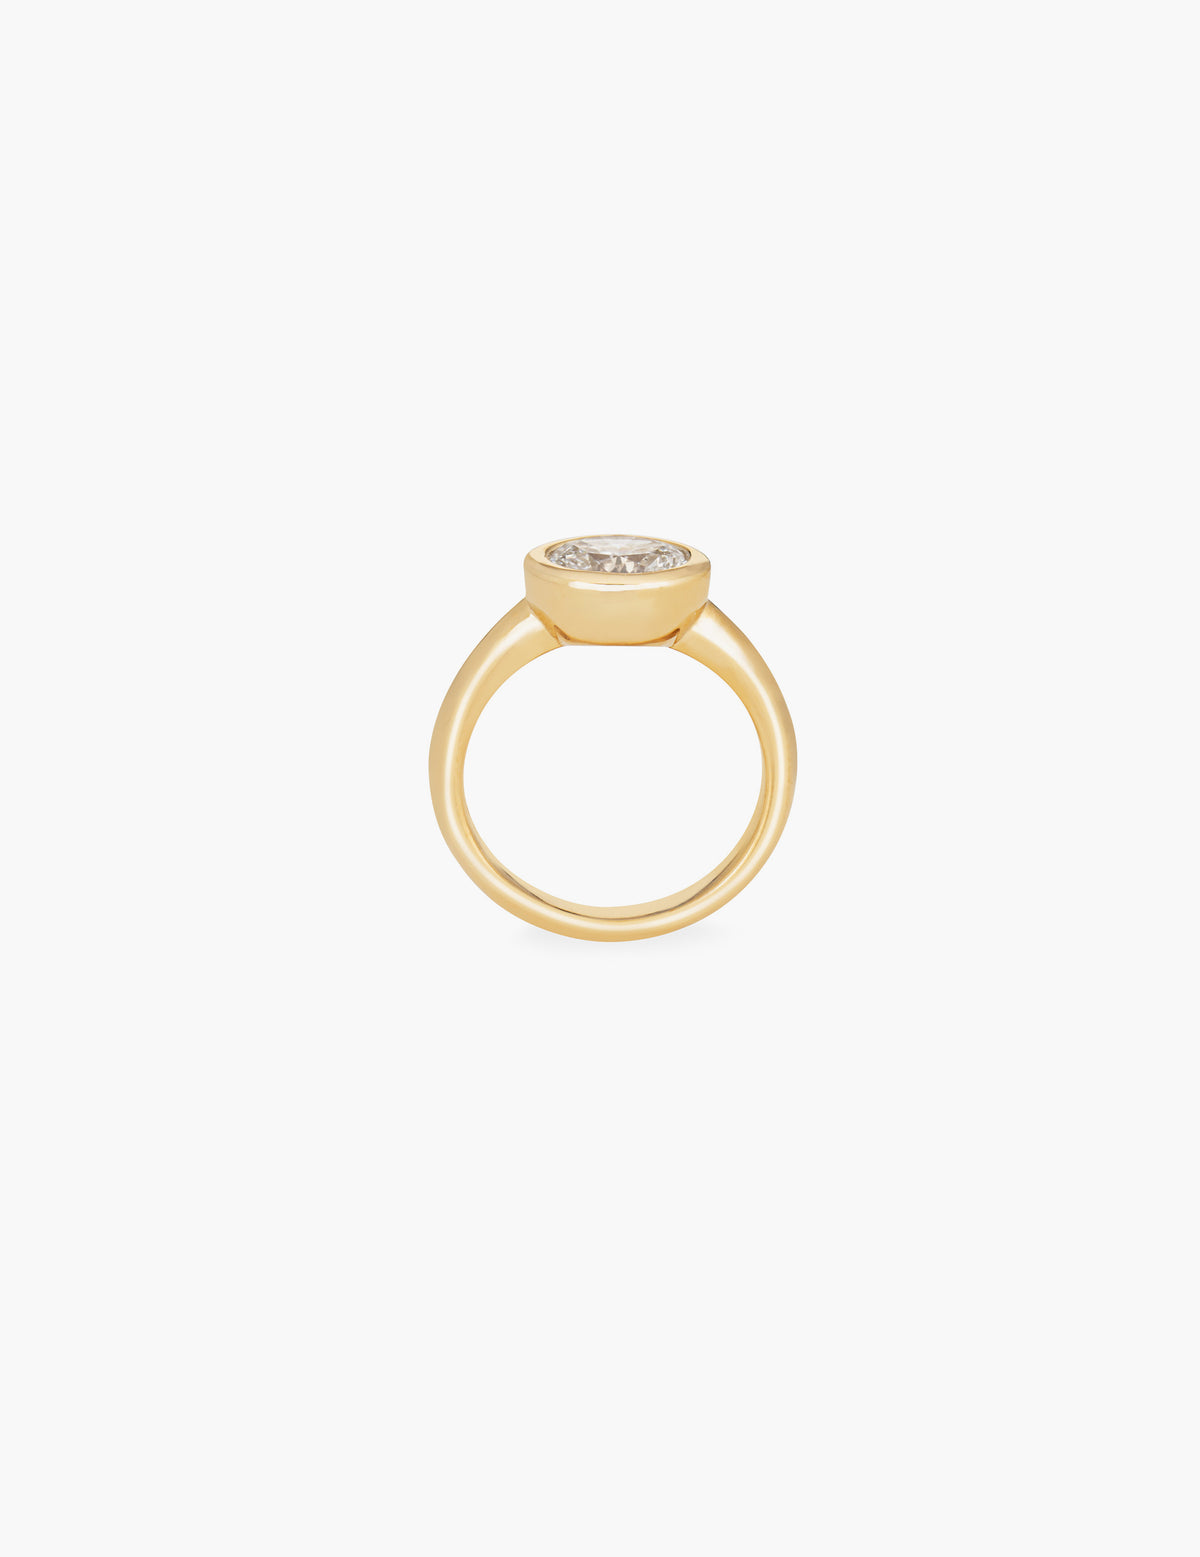 Mira Ring with 1.24ct Natural Diamond